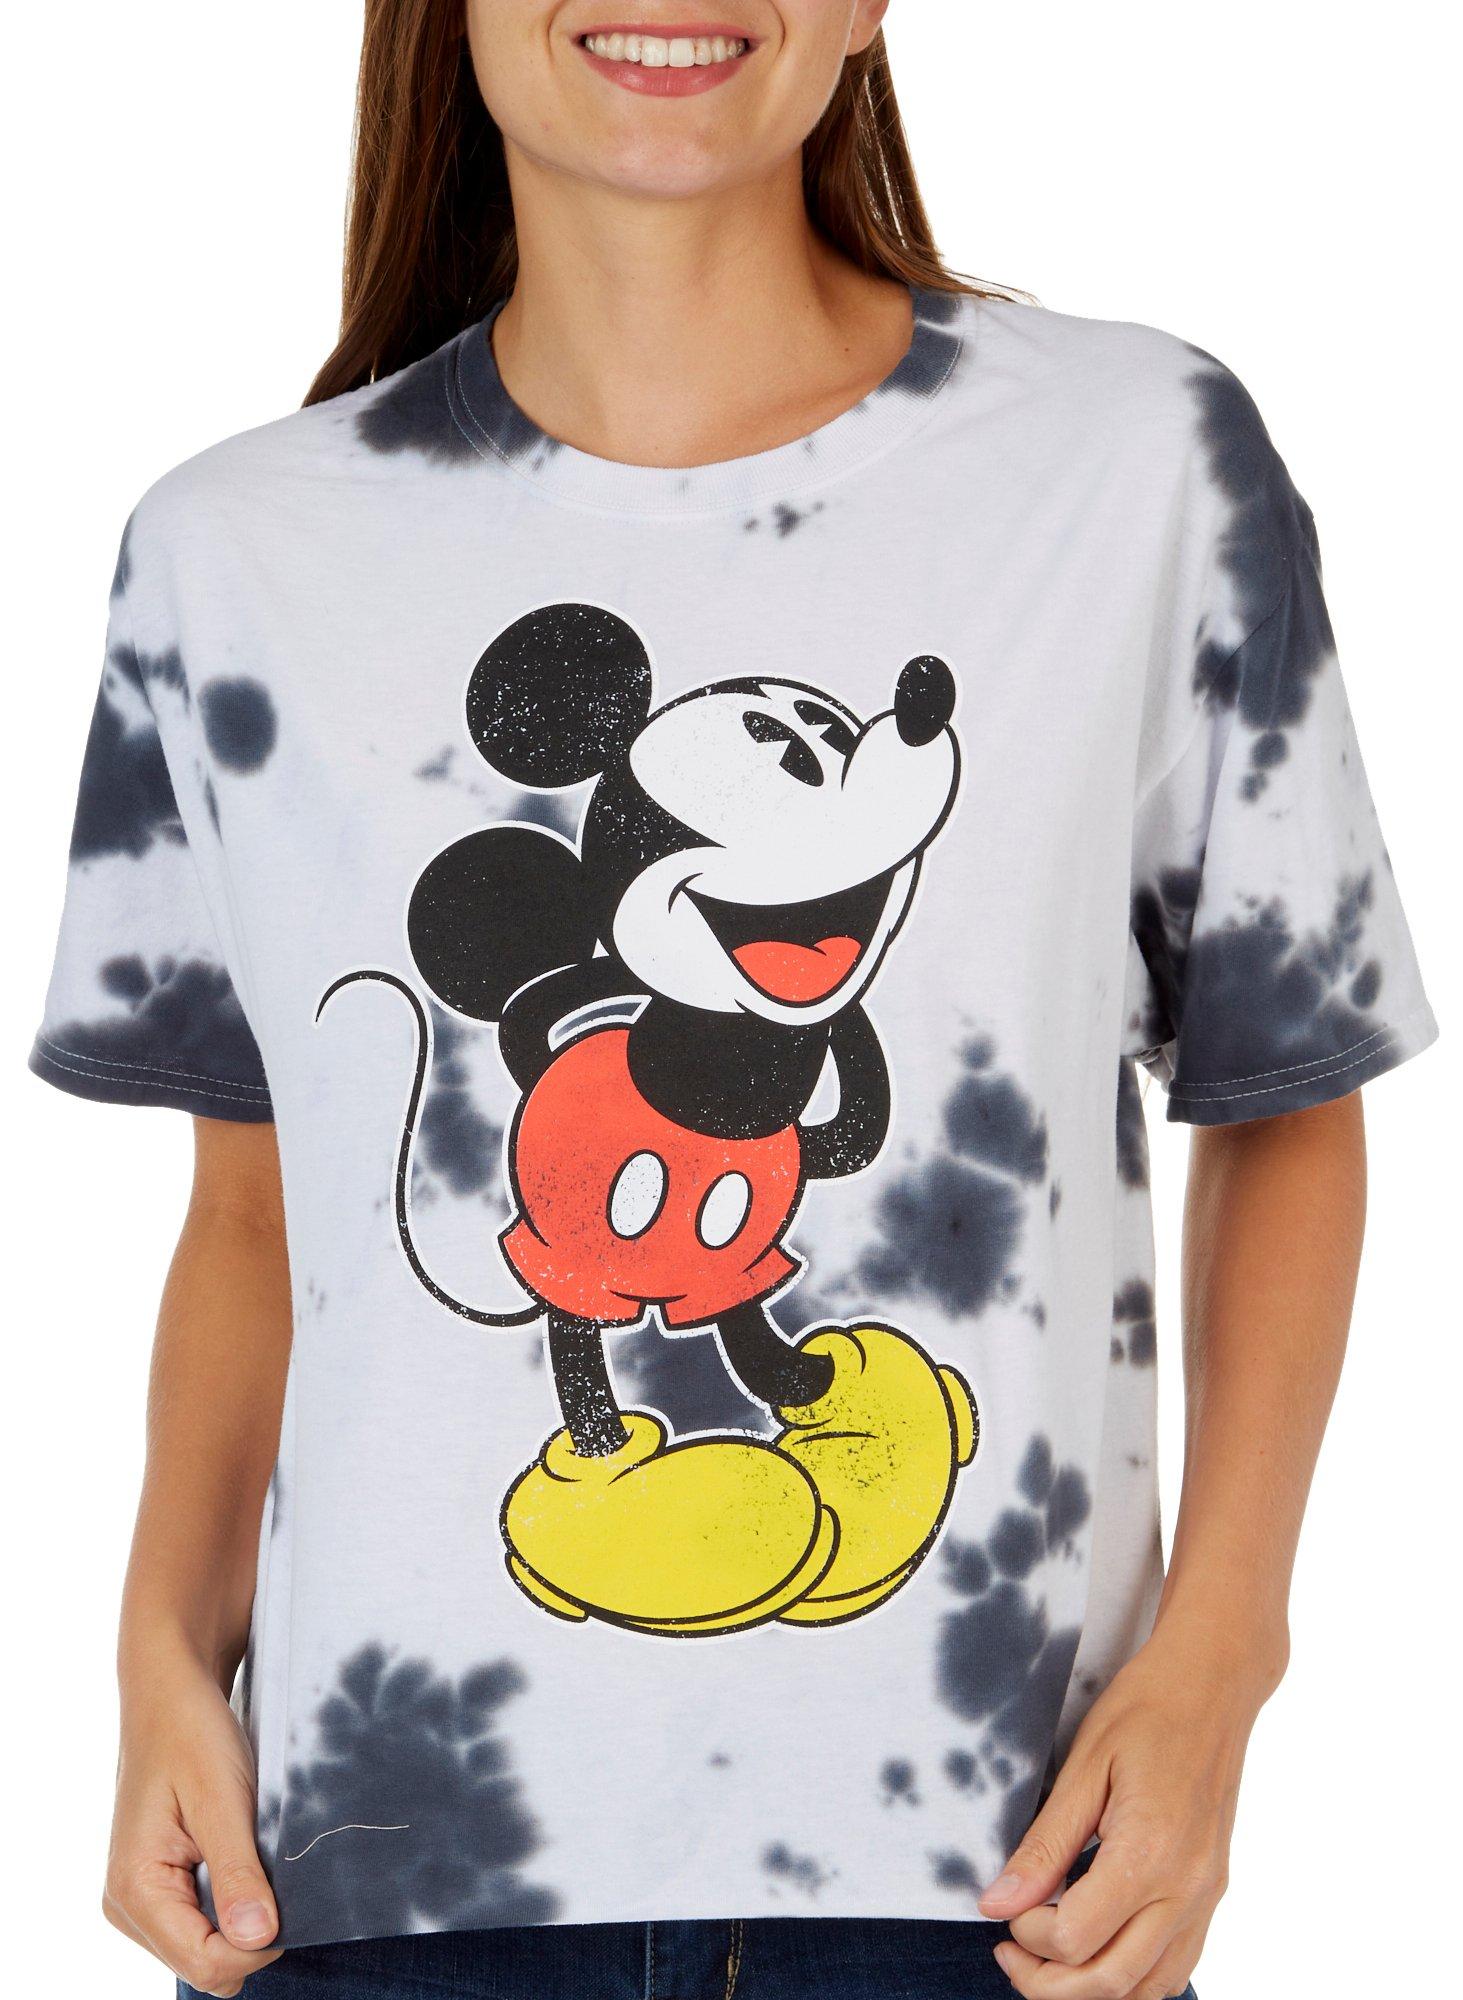 Disney Classic Mickey Mouse Big Face Womens Pajama T Shirt Top Black White Stripes 